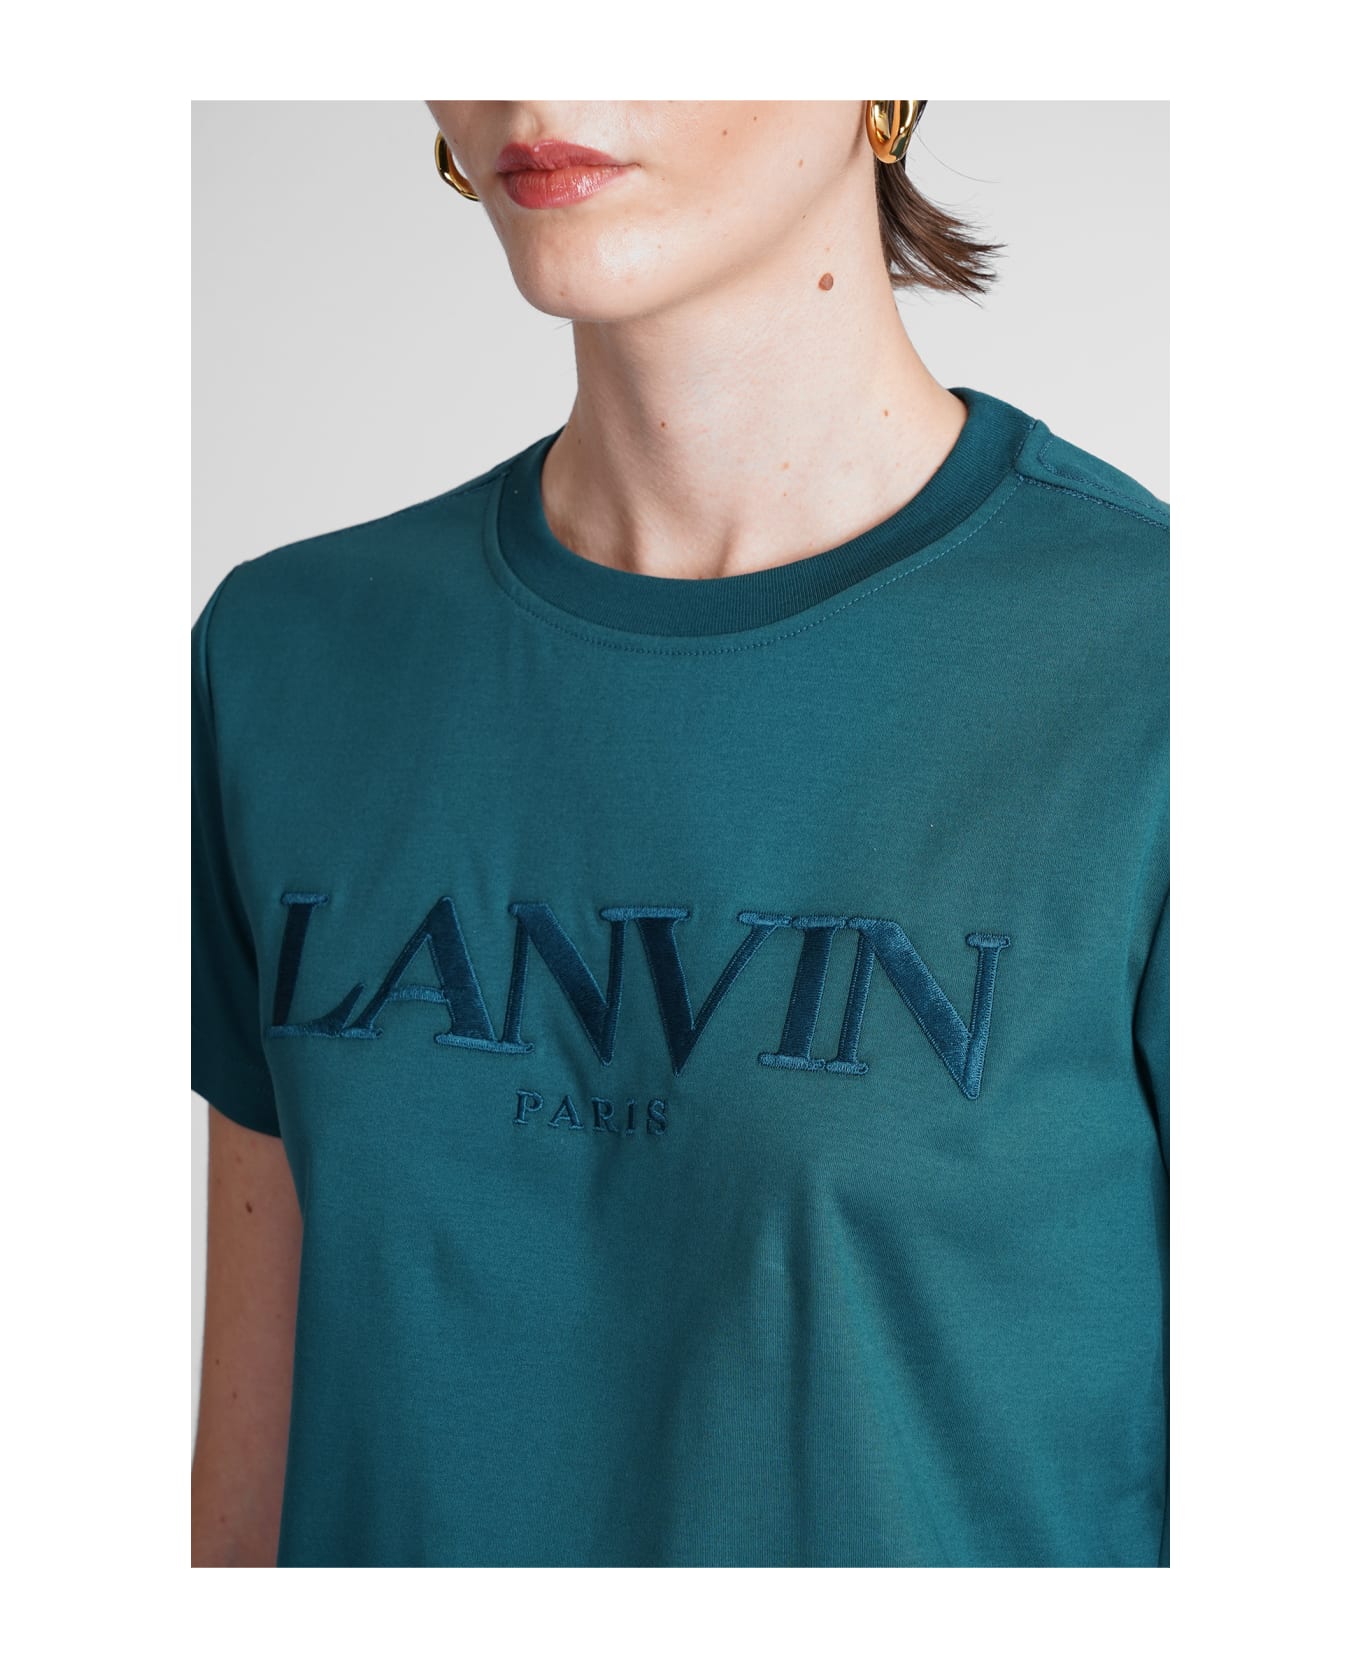 Lanvin T-shirt In Green Cotton - green